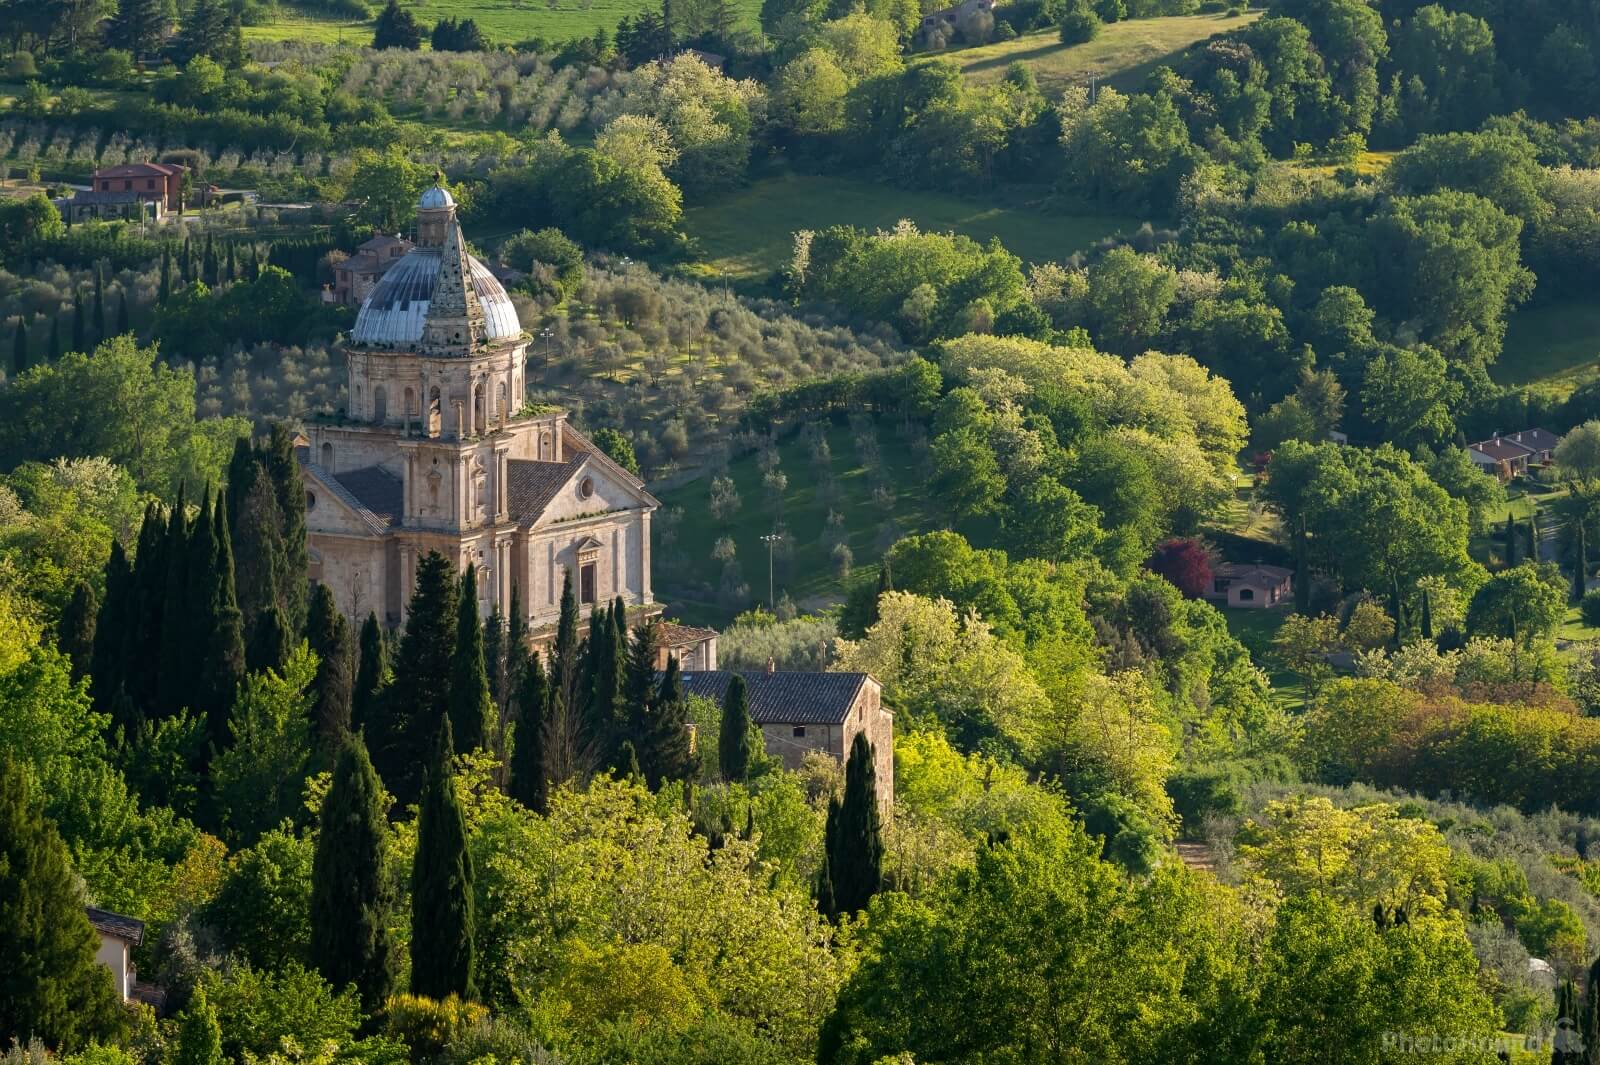 Image of Montepulciano views by VOJTa Herout